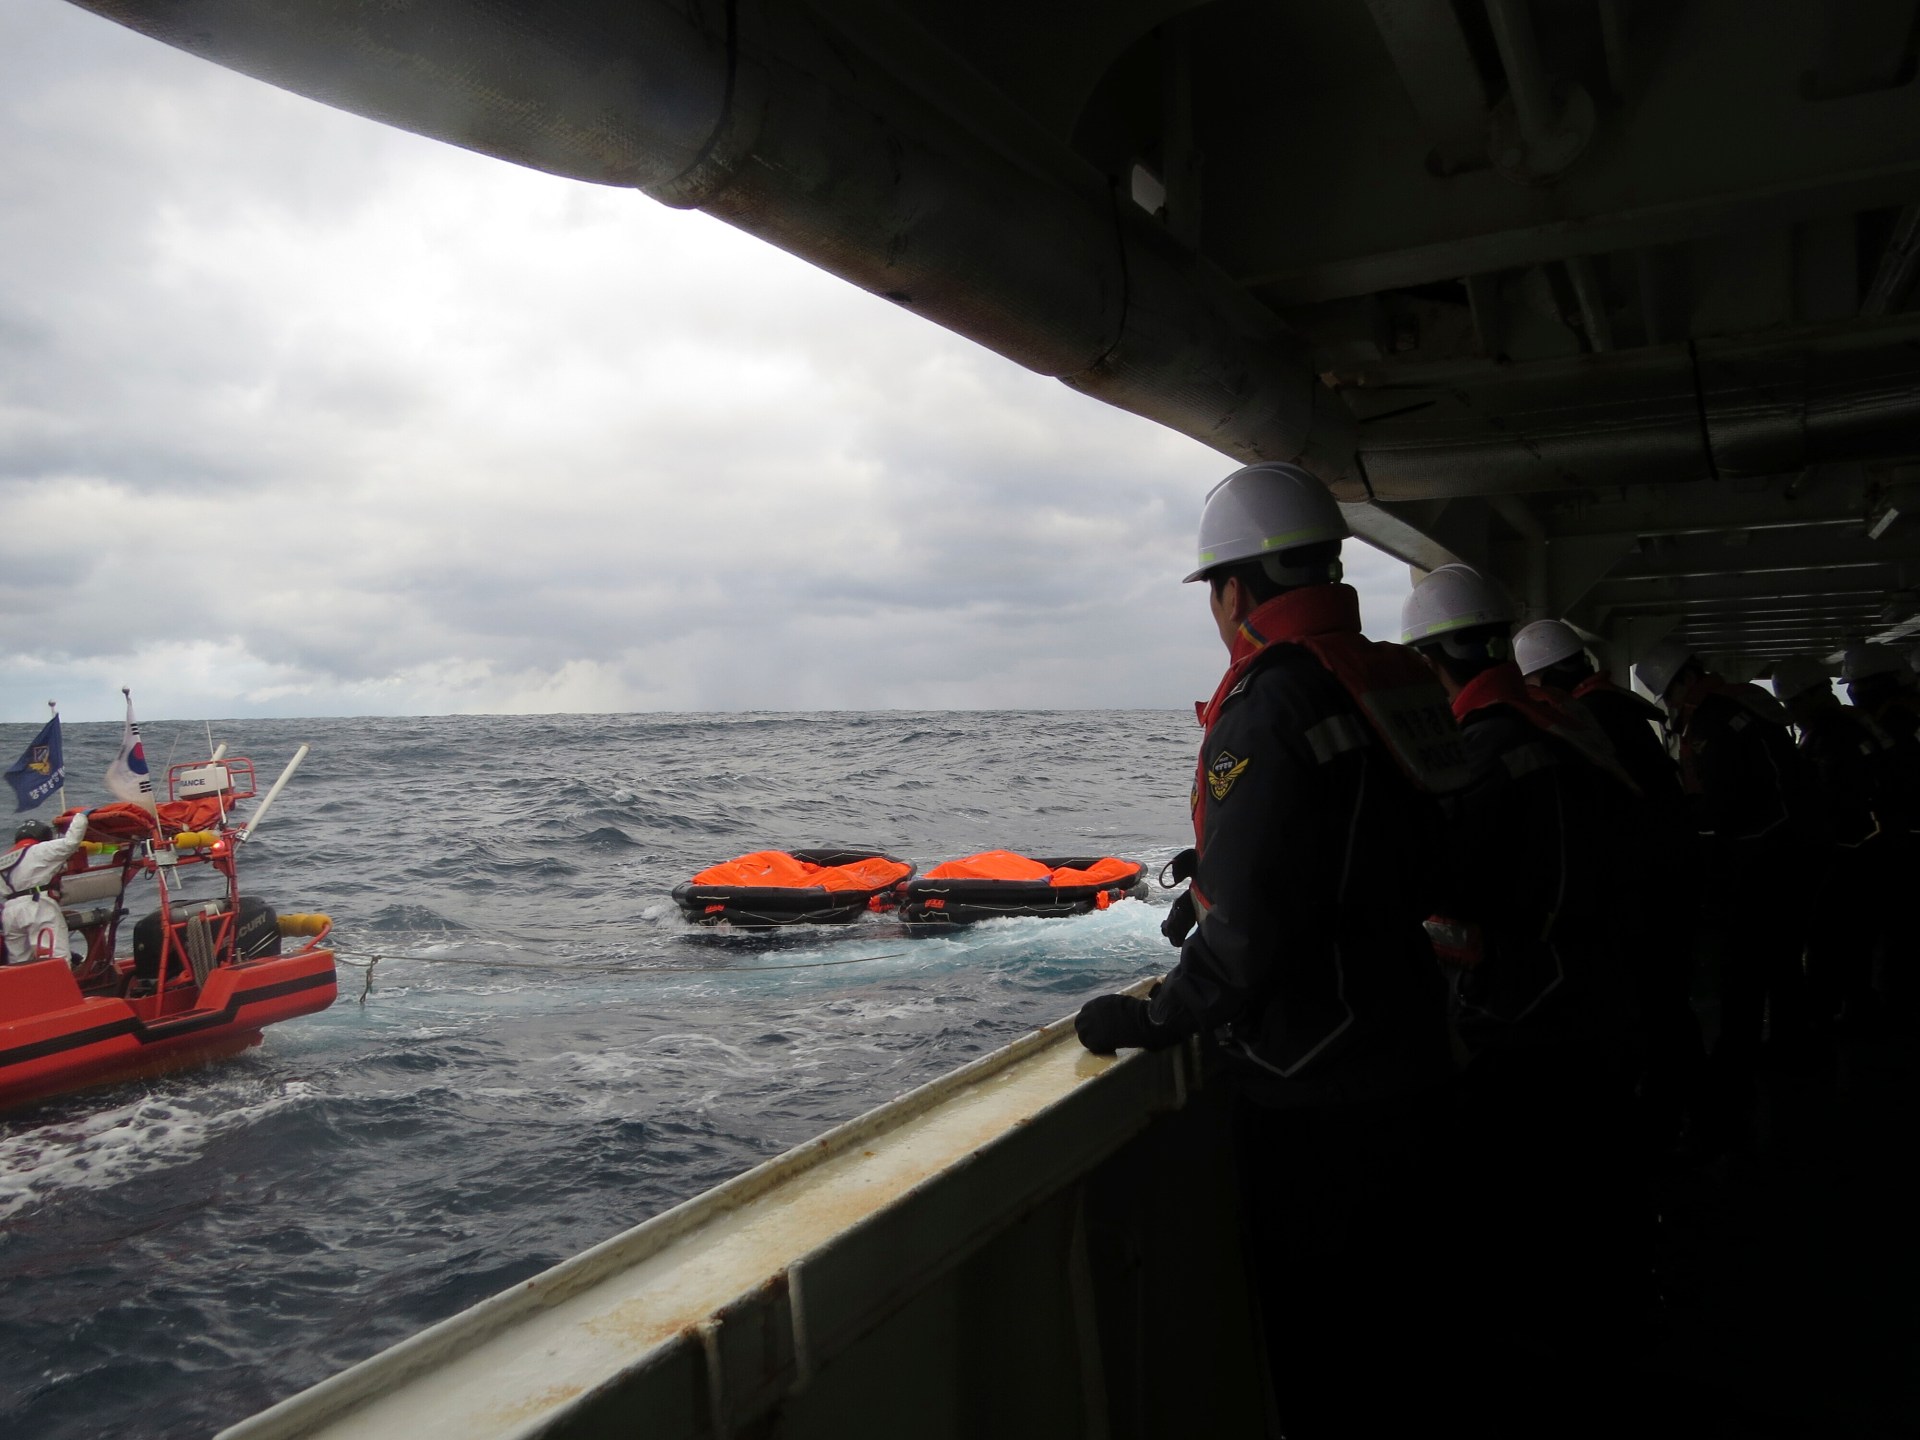 18 missing, 4 rescued after cargo ship sinks off southwest Japan